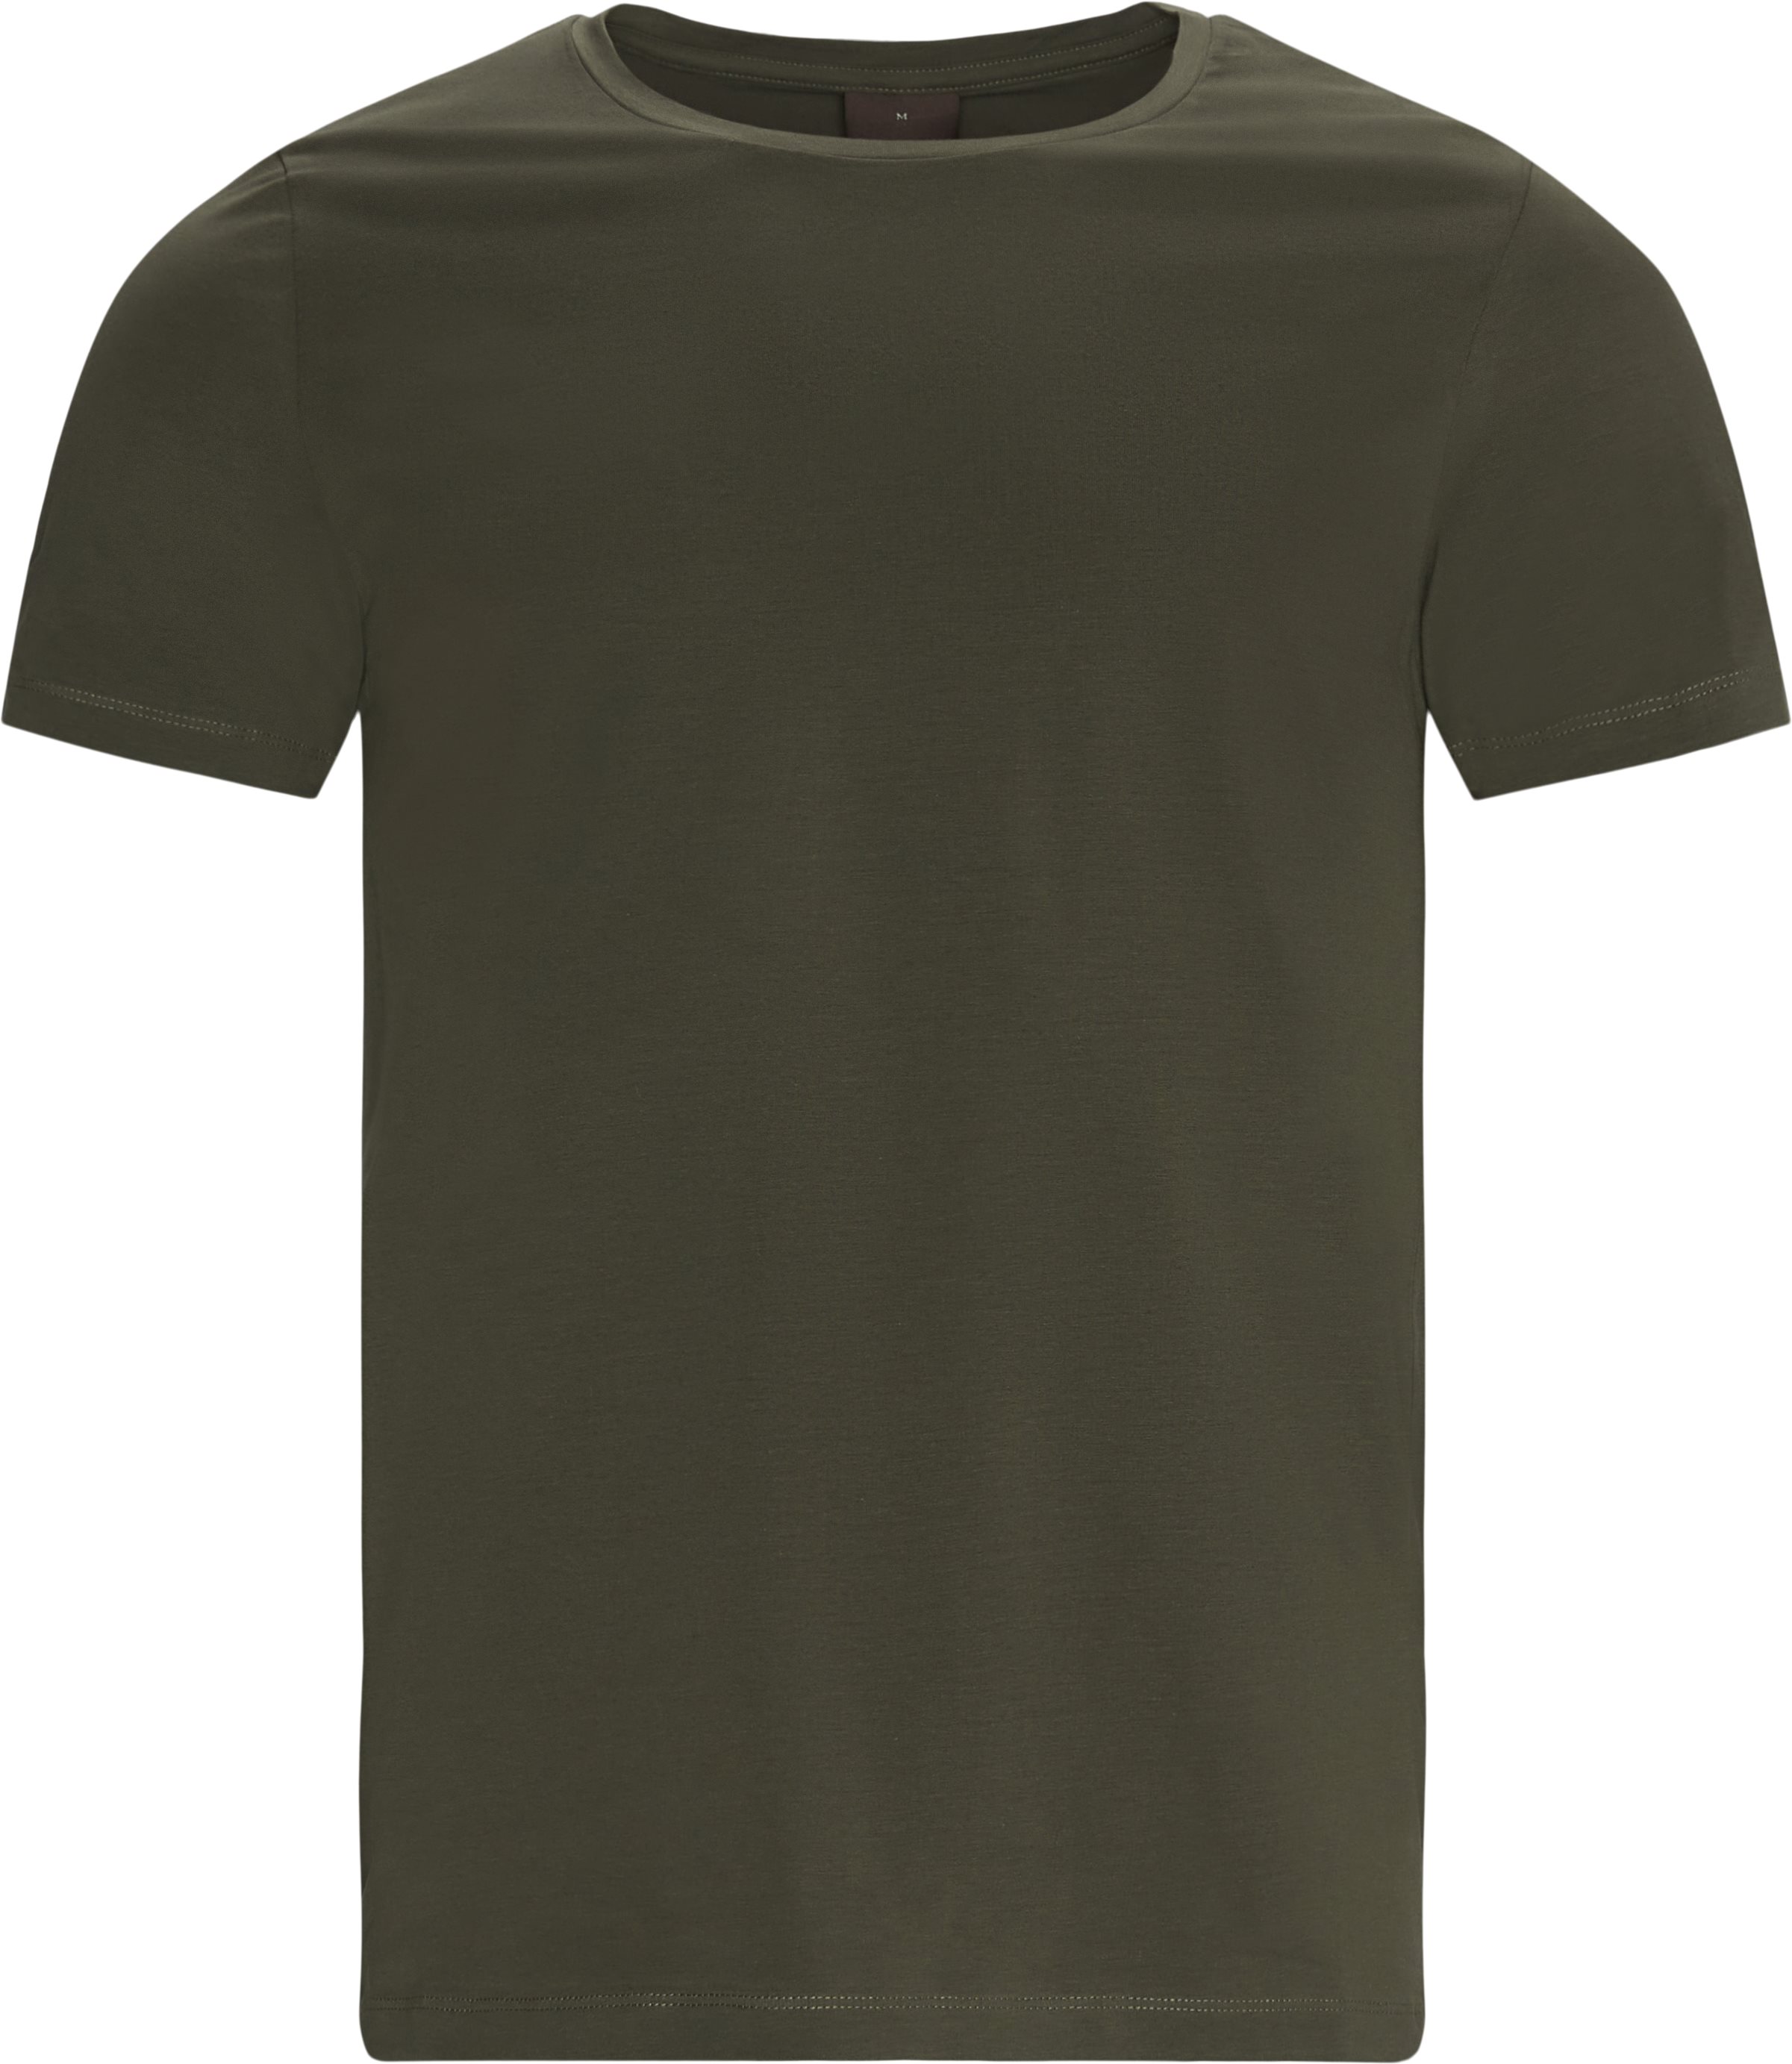 Kyran T-shirt - T-shirts - Regular fit - Army